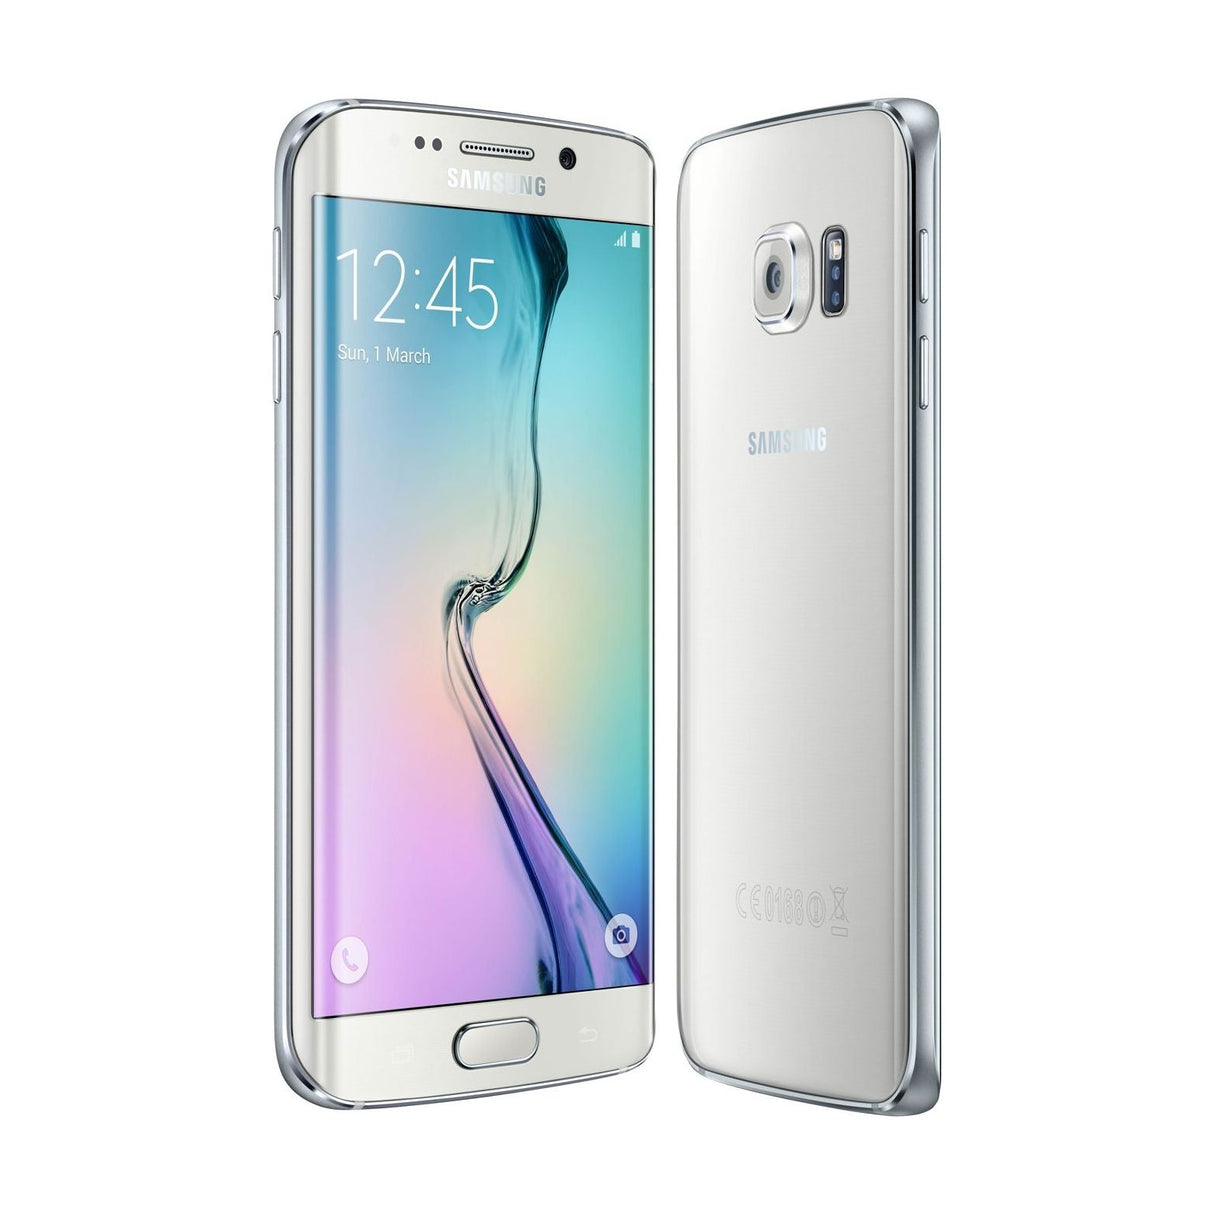 Samsung Galaxy S6 edge - 128 GB - White Pearl - Verizon - CDMA/G